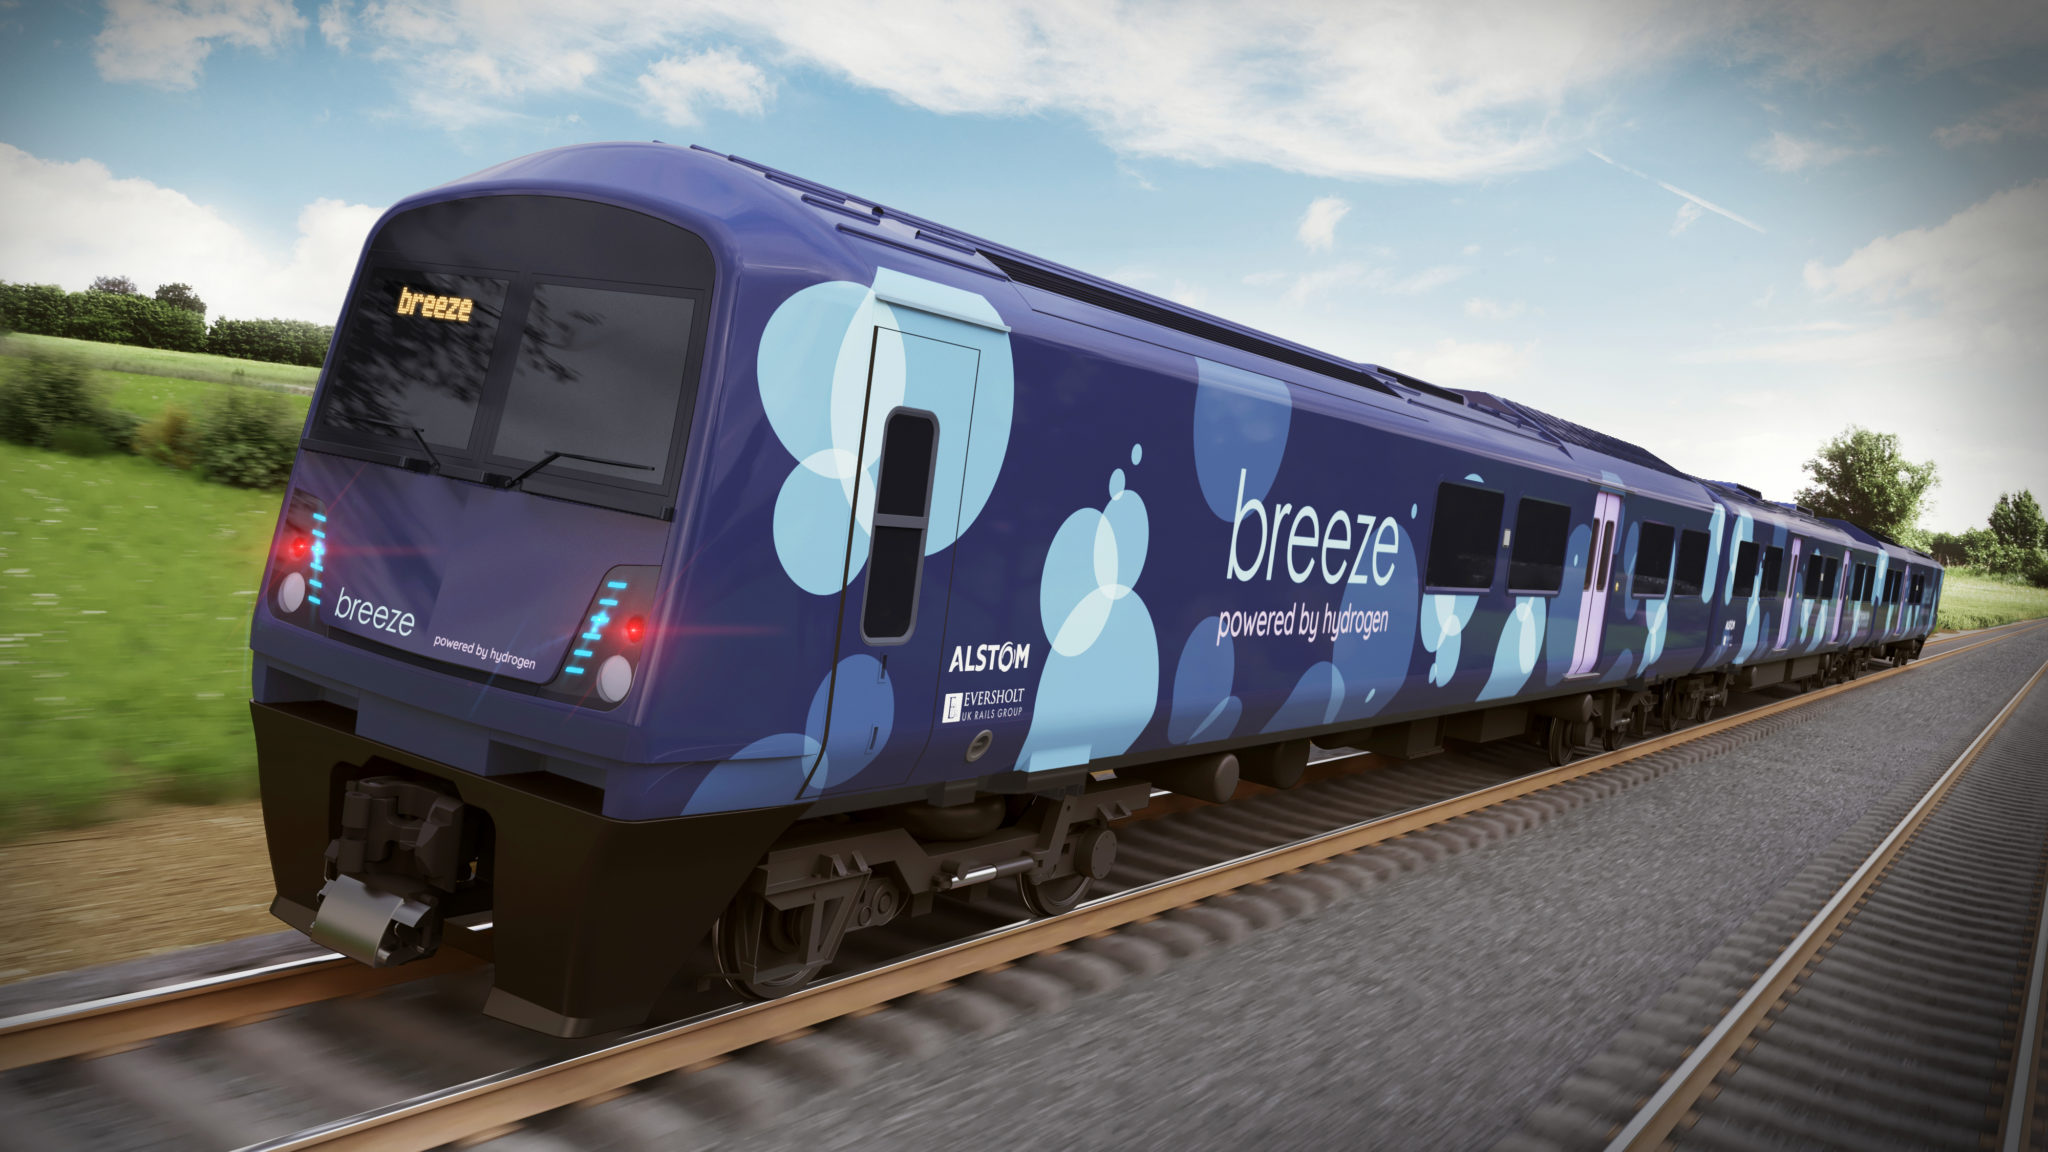 Alstom's new hydrogen train design - the Breeze train